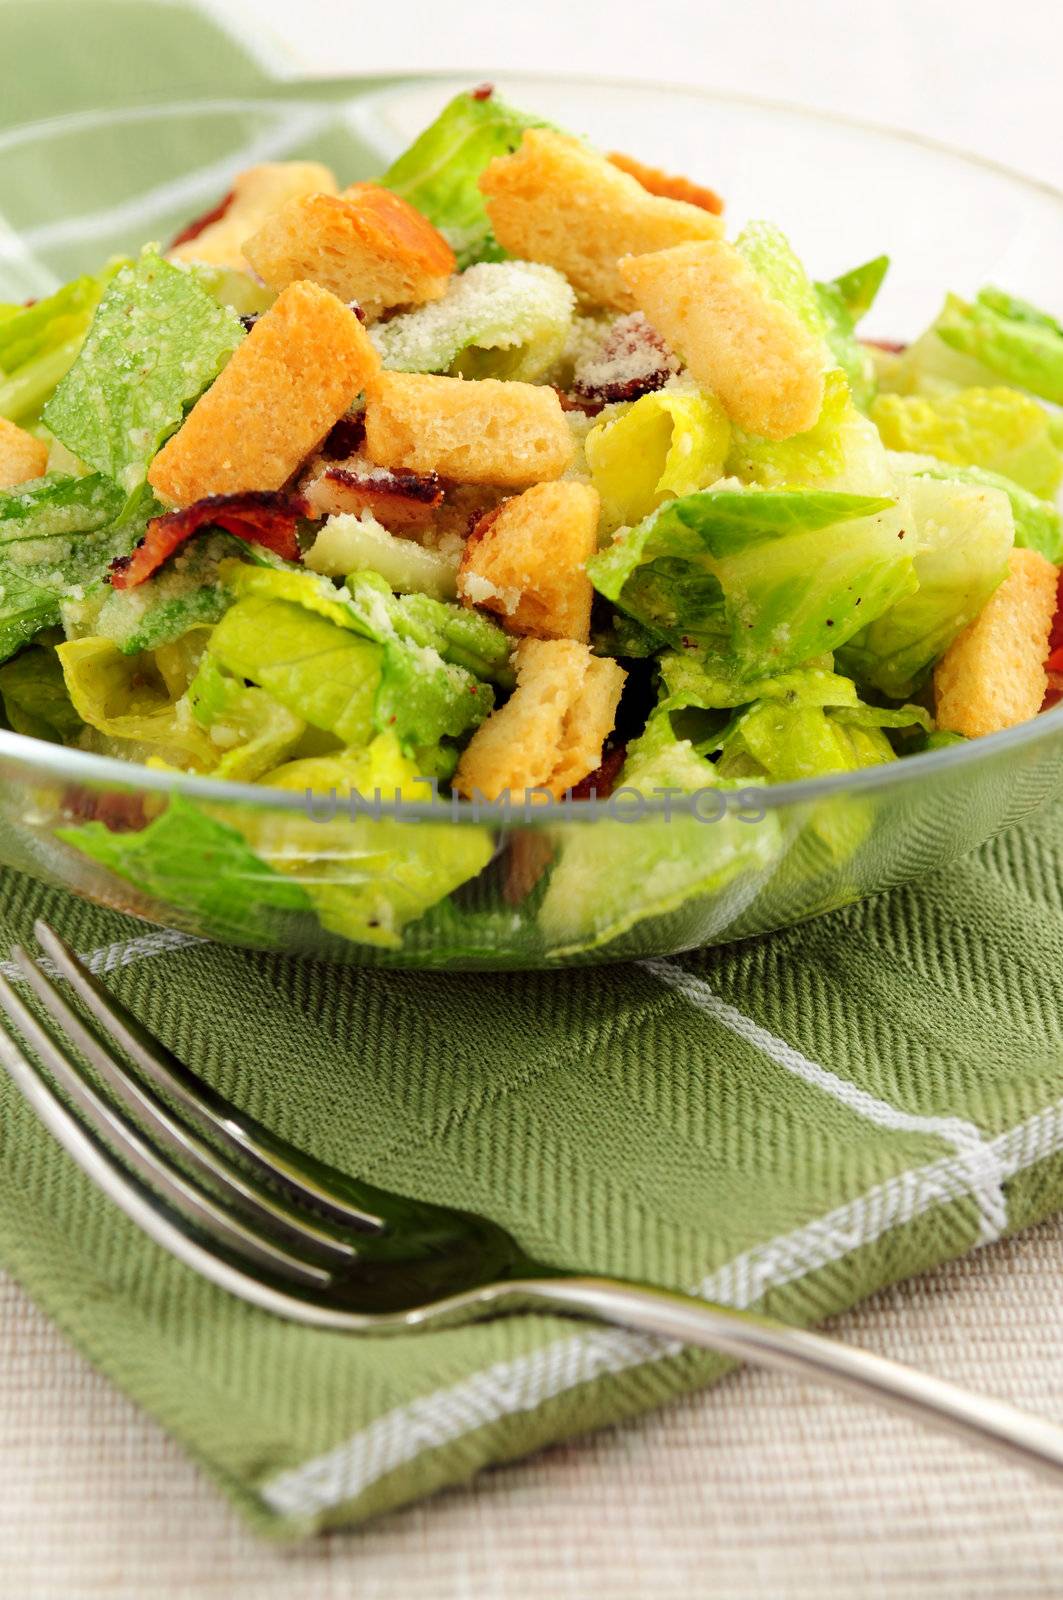 Caesar salad by elenathewise